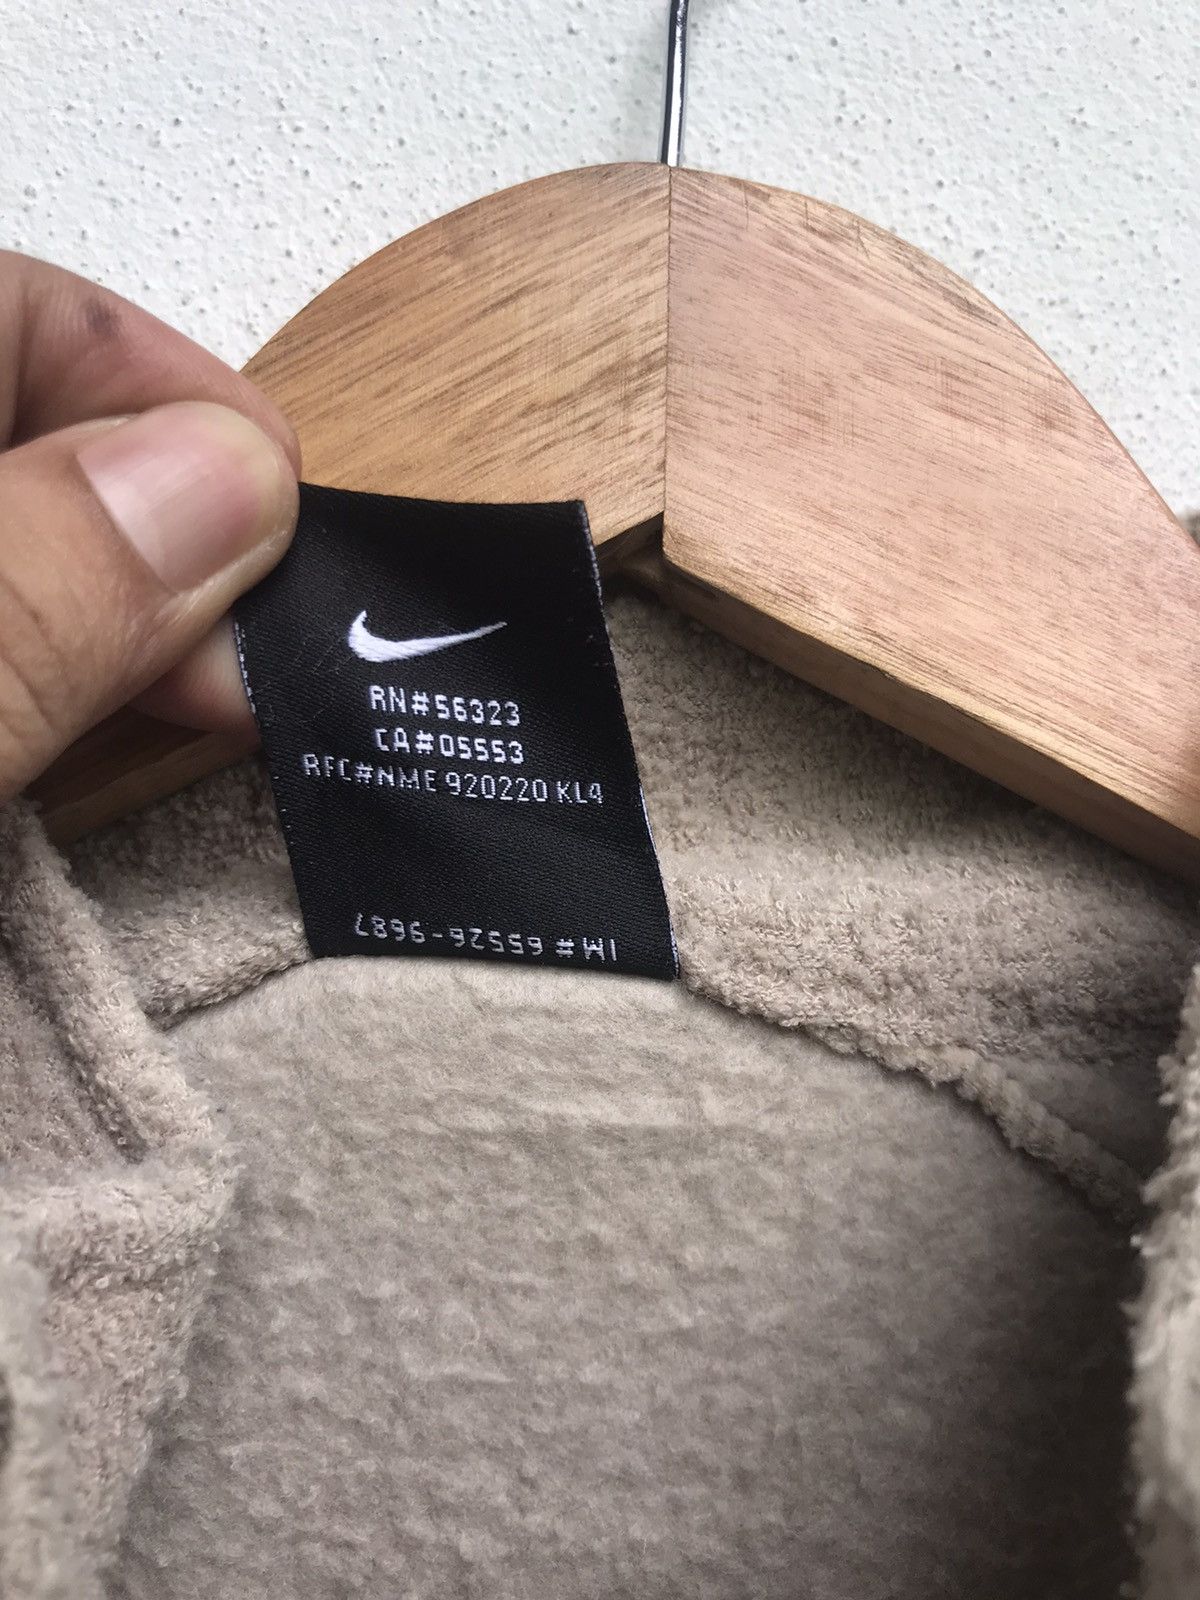 Nike Nike ACG Fleece Sweater Jacket Size US S / EU 44-46 / 1 - 11 Thumbnail